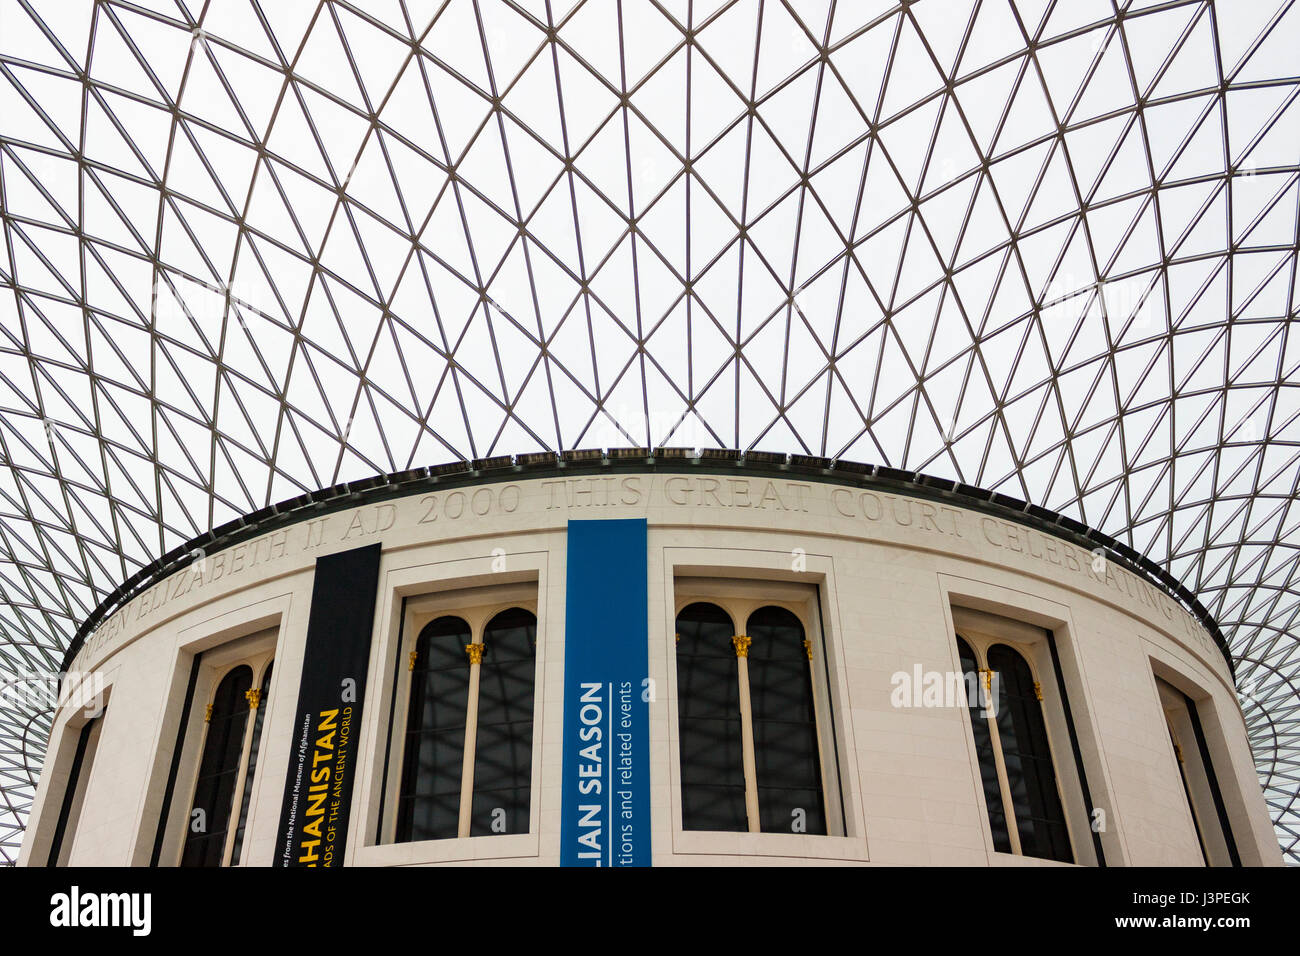 Inneren British Museum, London, England-Kauf von Dreamstime: http://bit.ly/1jB609i Stockfoto